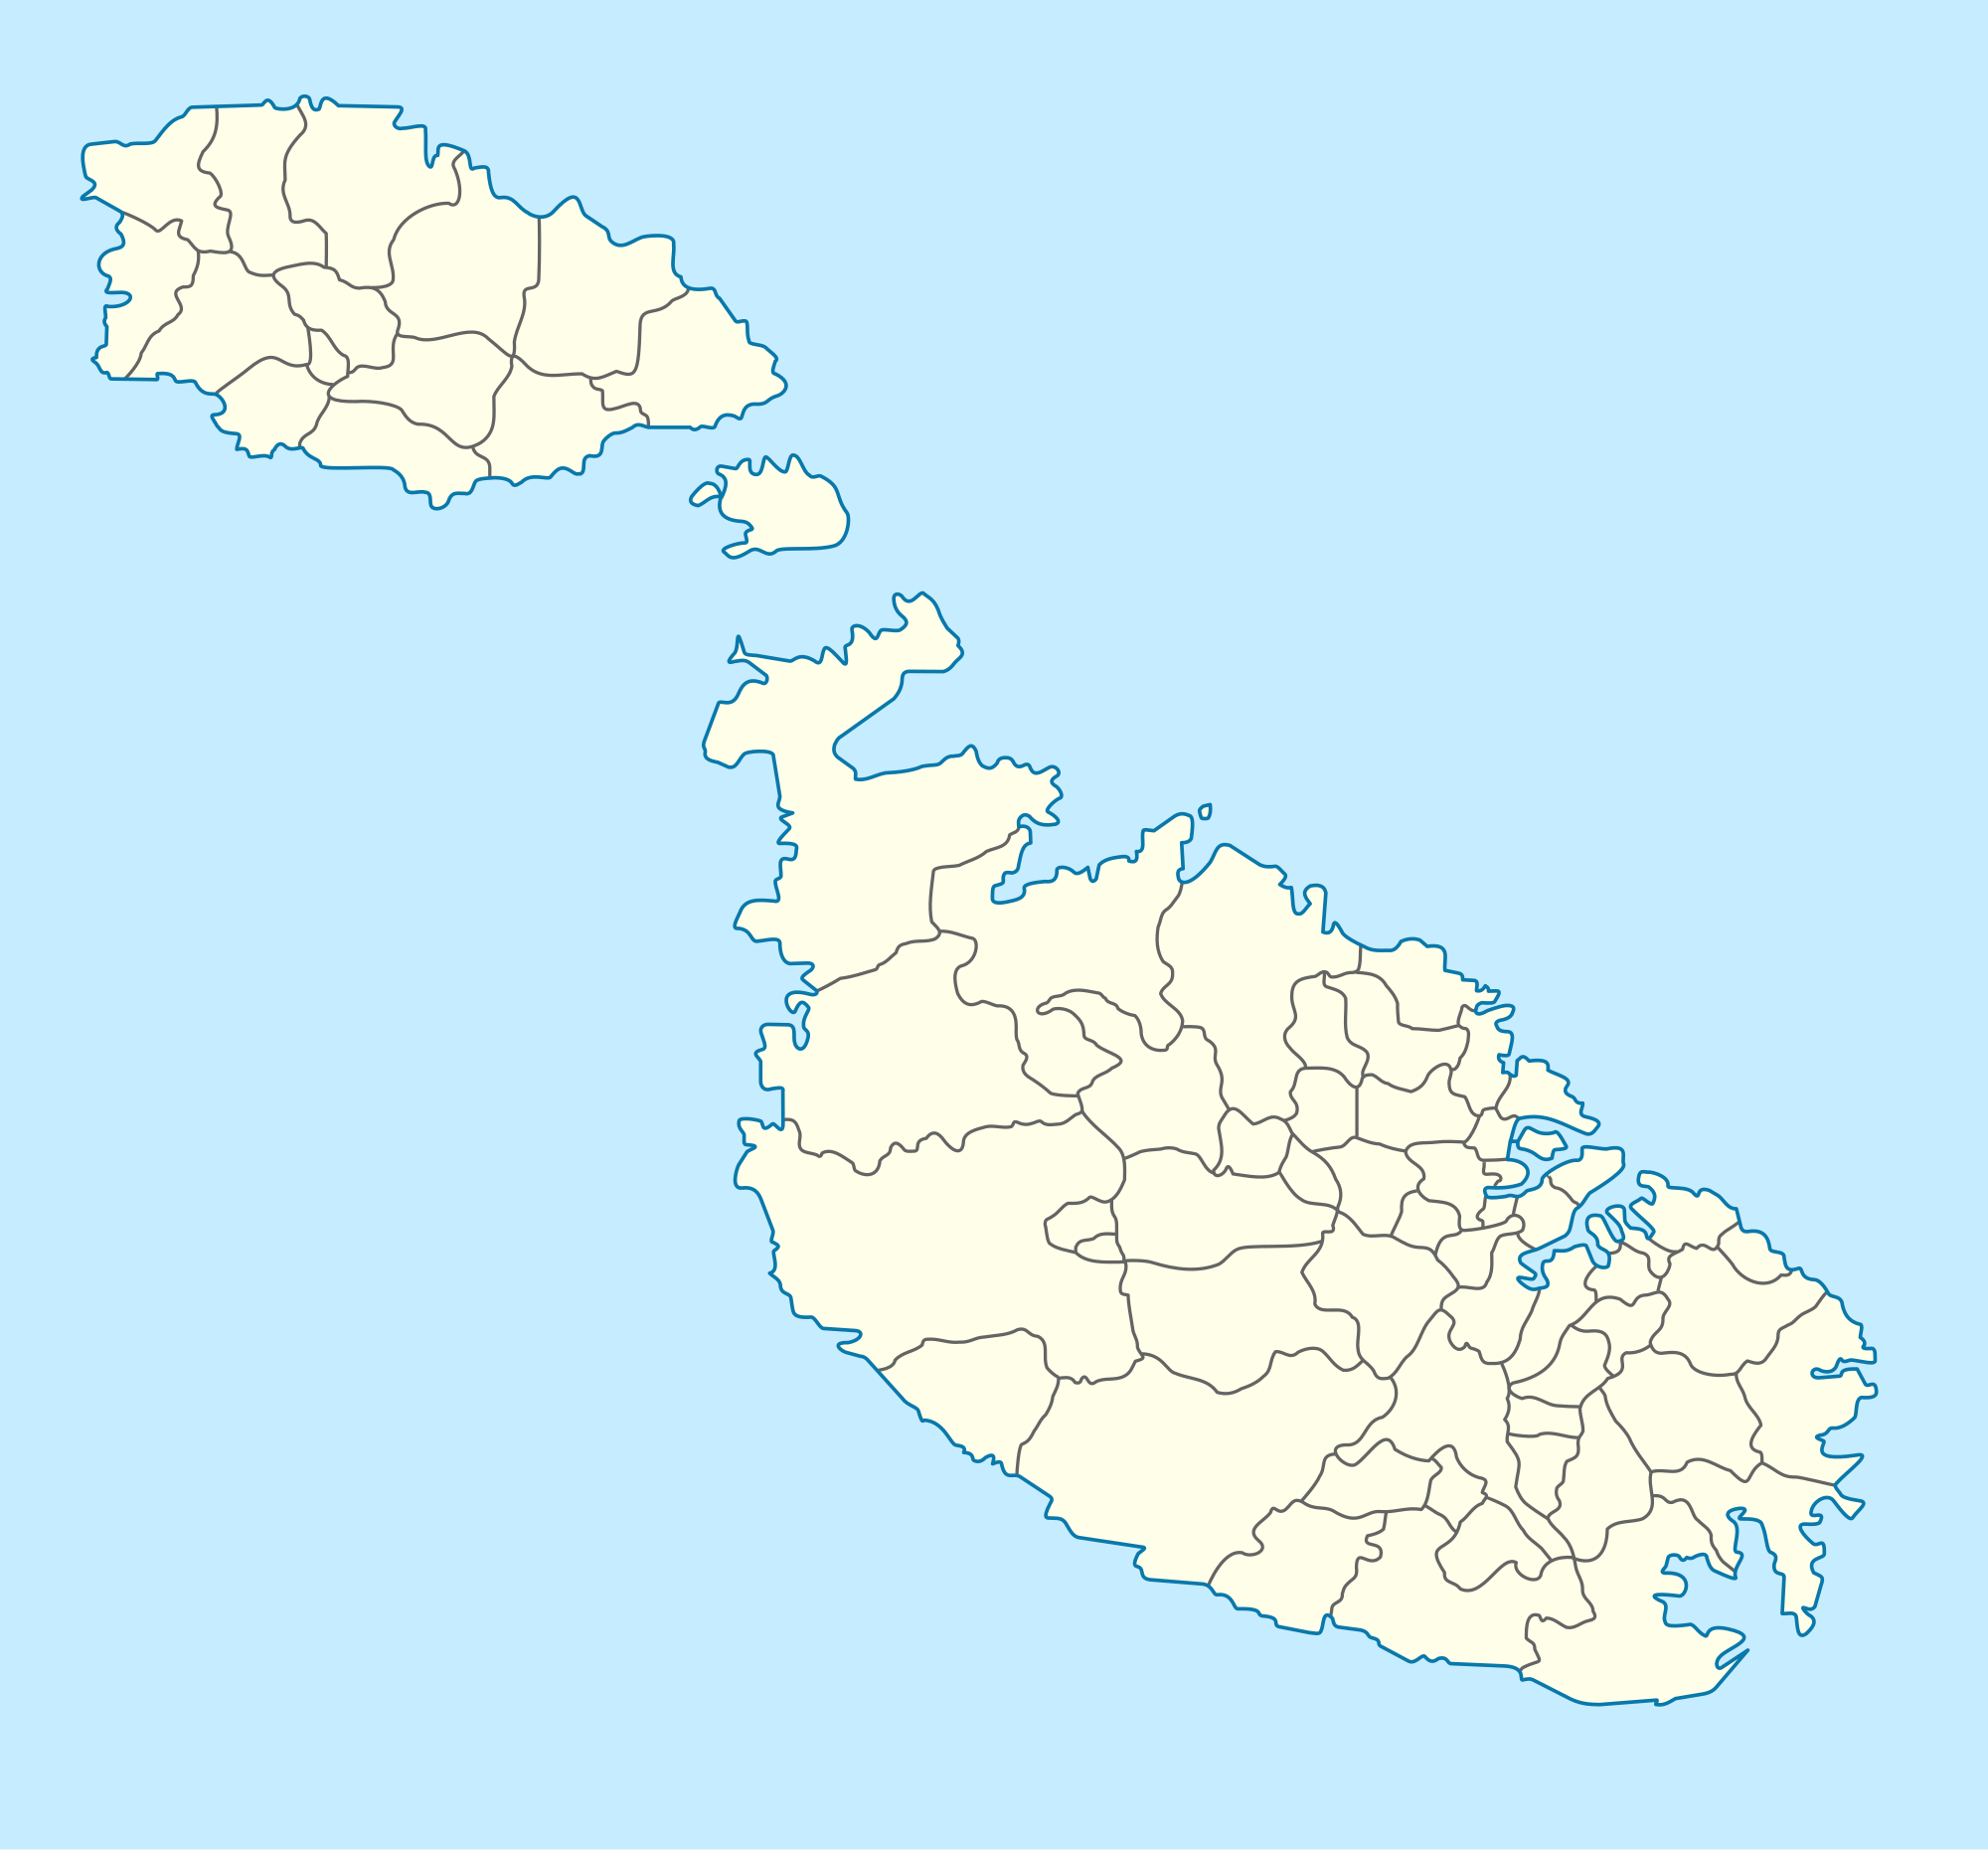 Malta - Wikipedia, the free encyclopedia